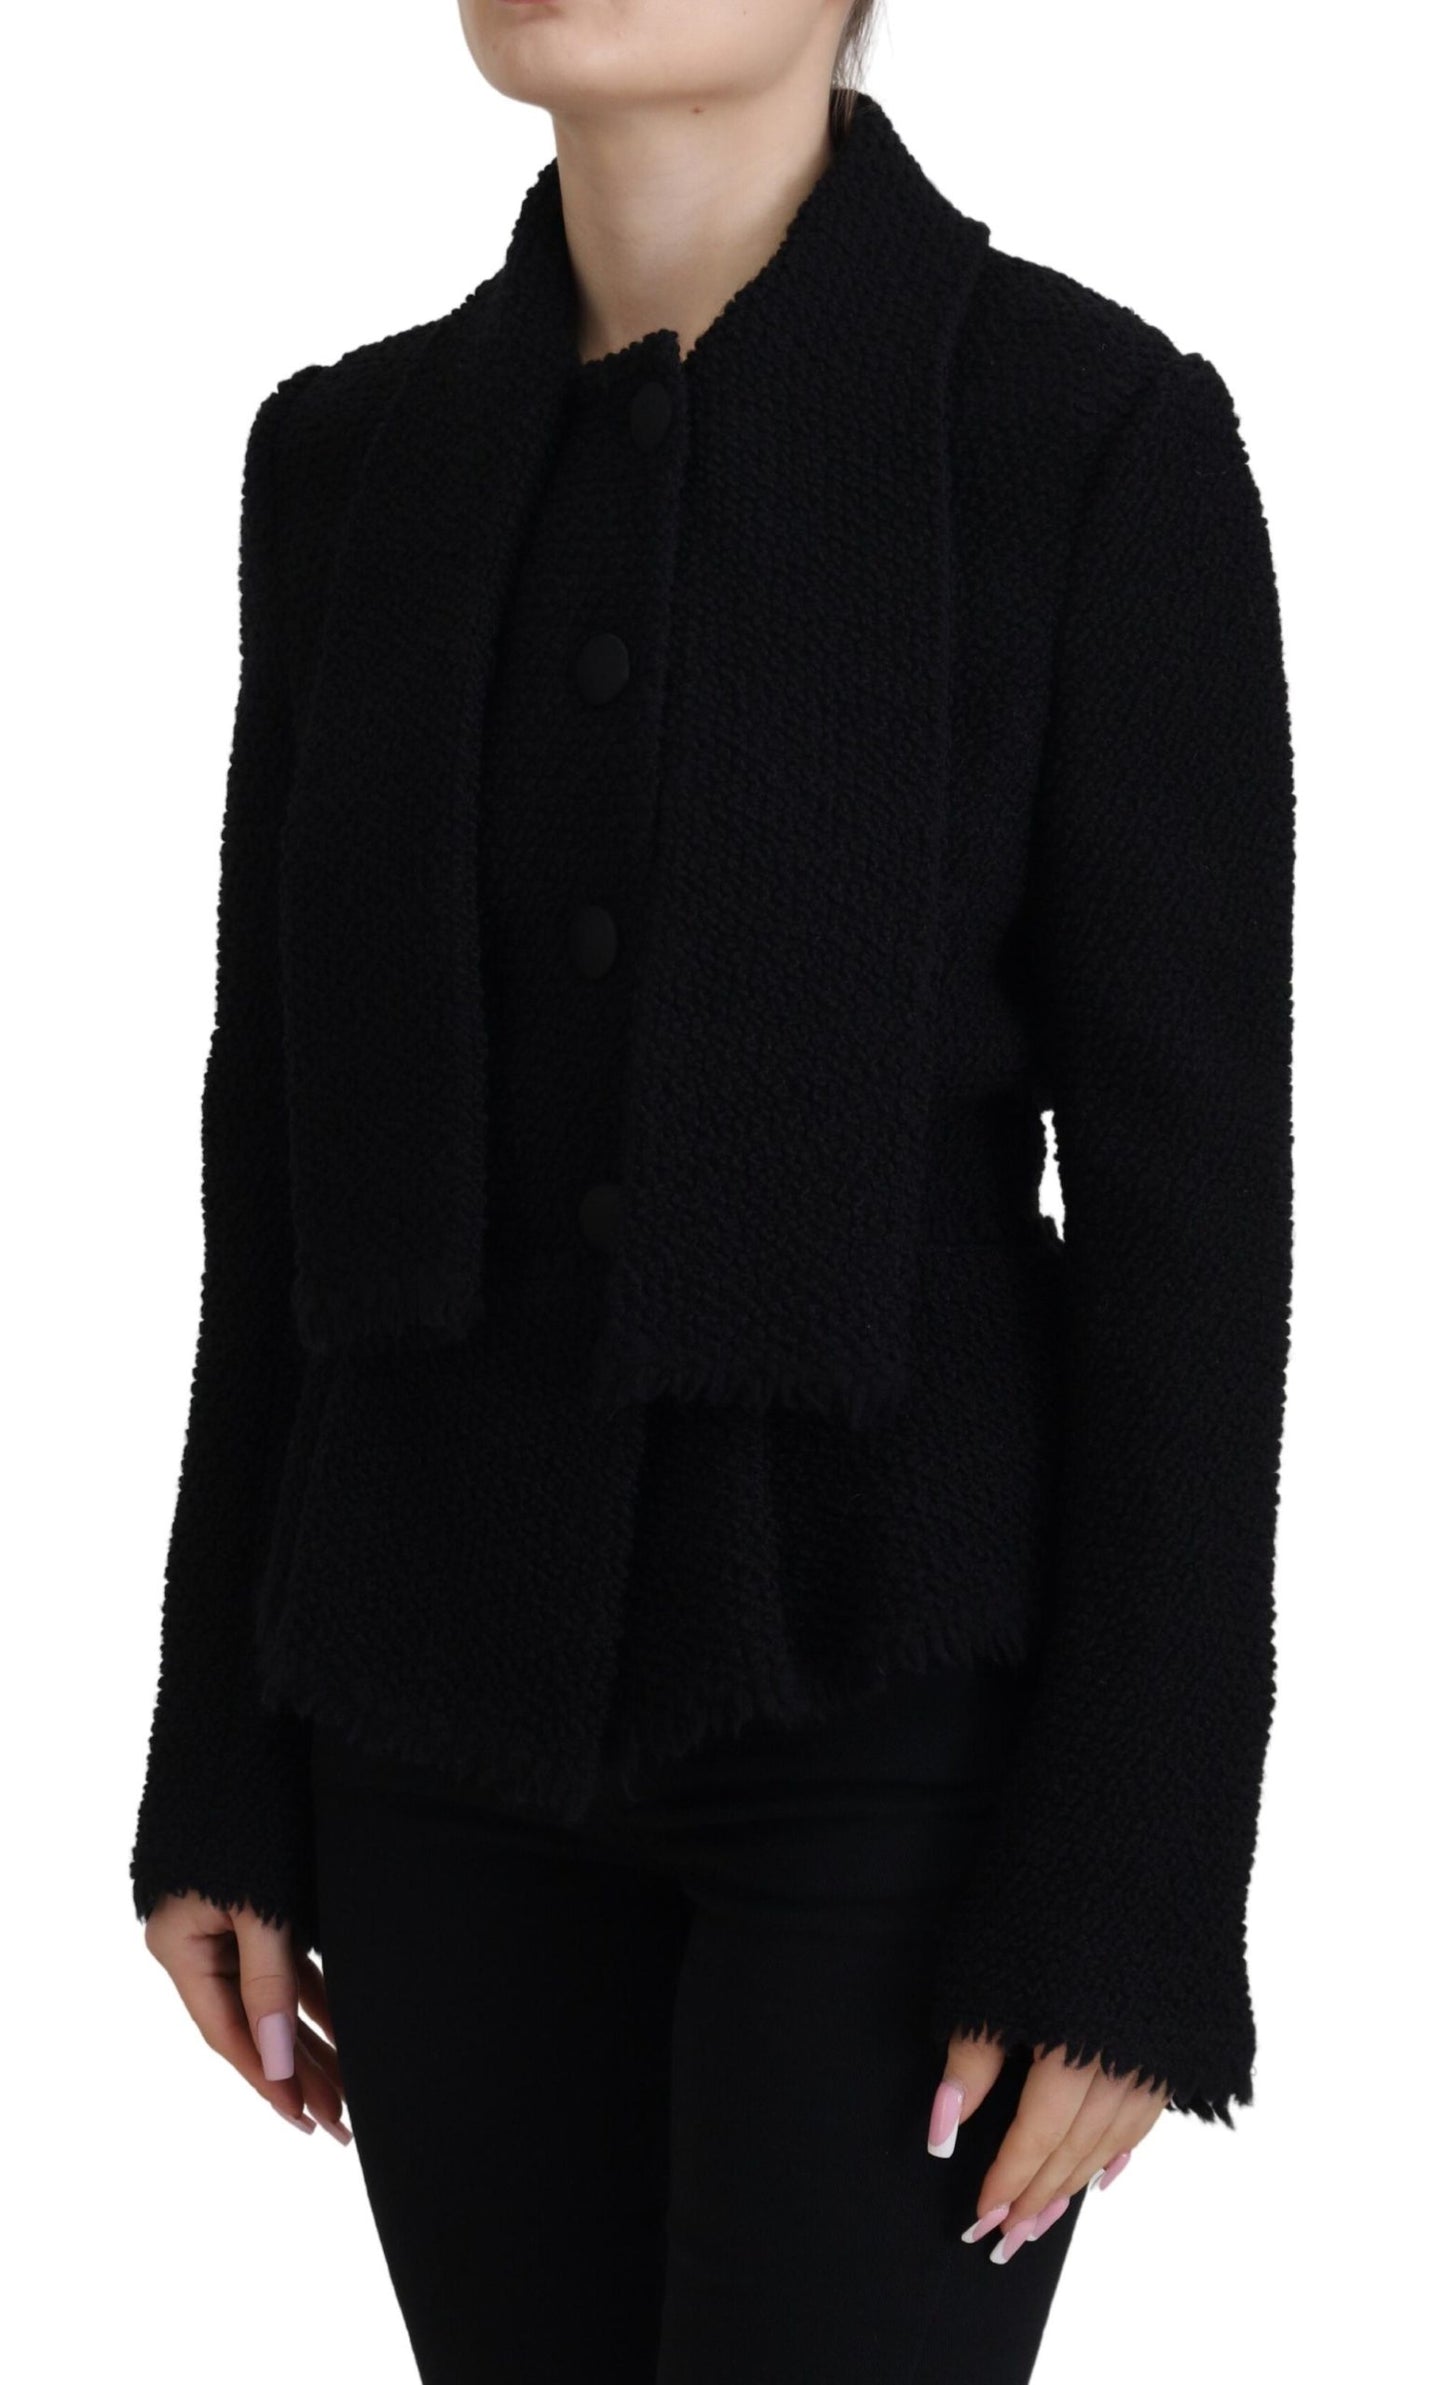 Giacca per blazer per blazer Dolce & Gabbana Black Wool Coat